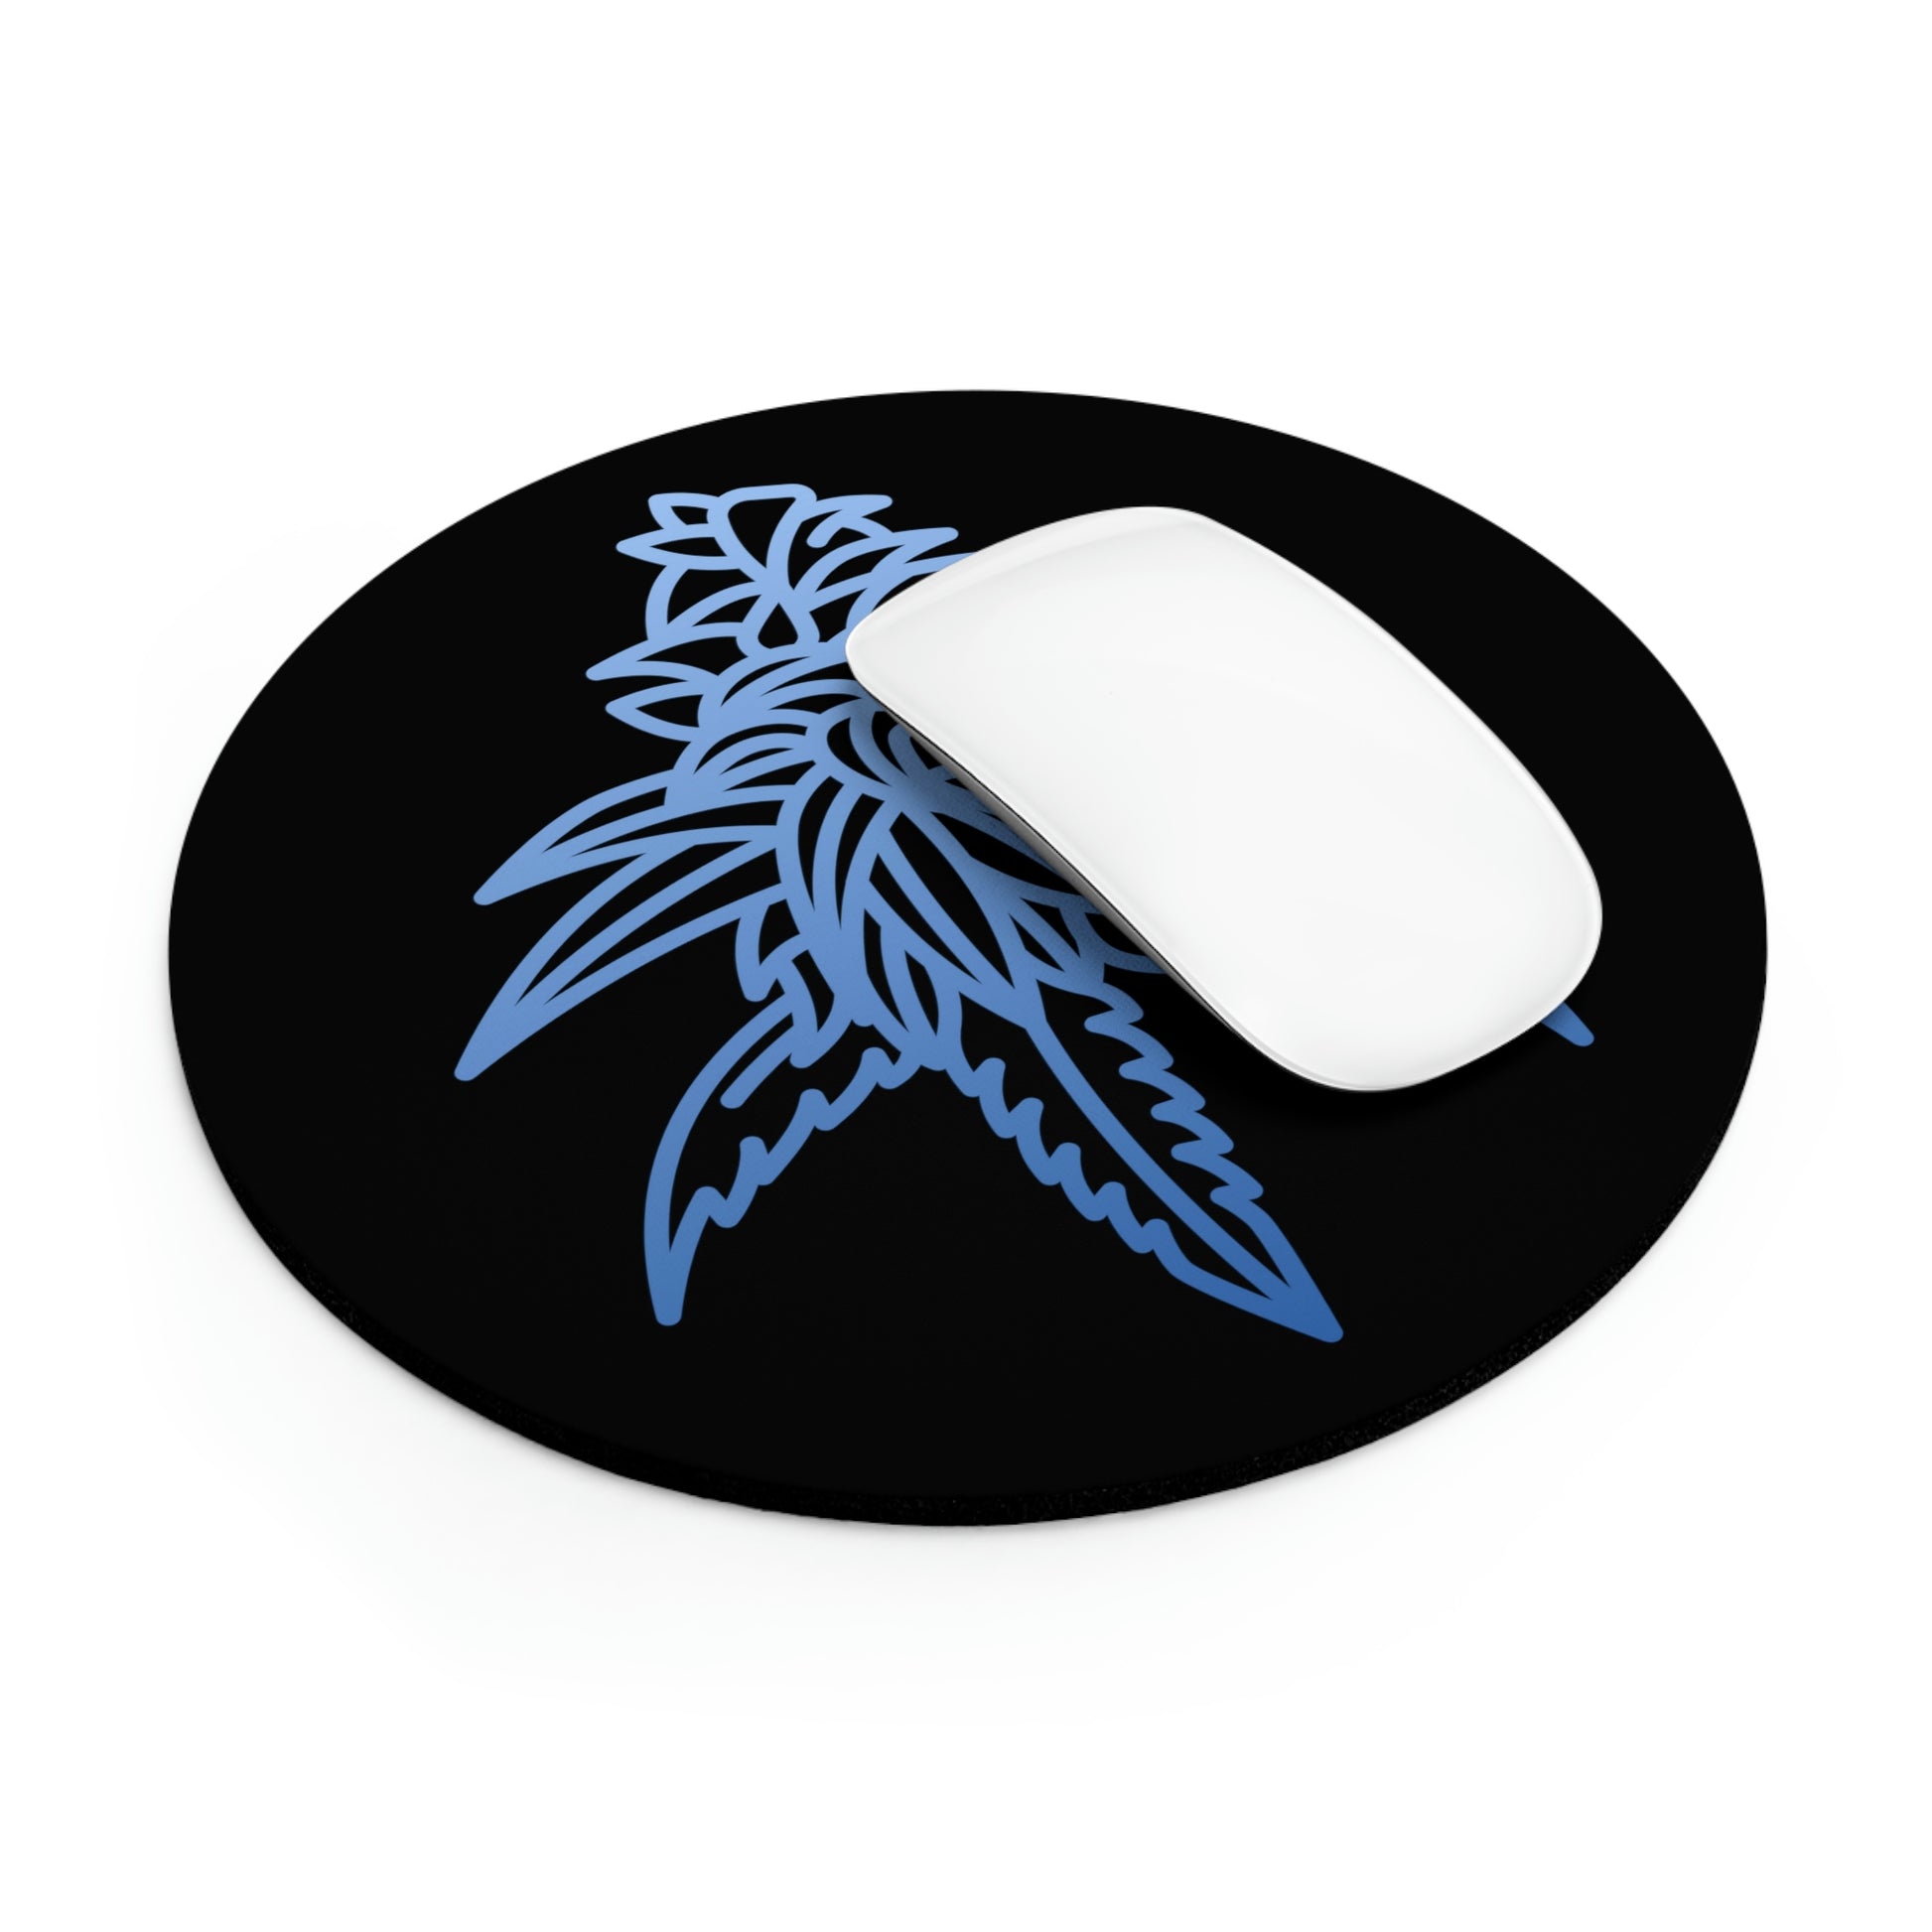 a black Blue Dream Cannabis mouse pad with a blue marijuana leaf design.